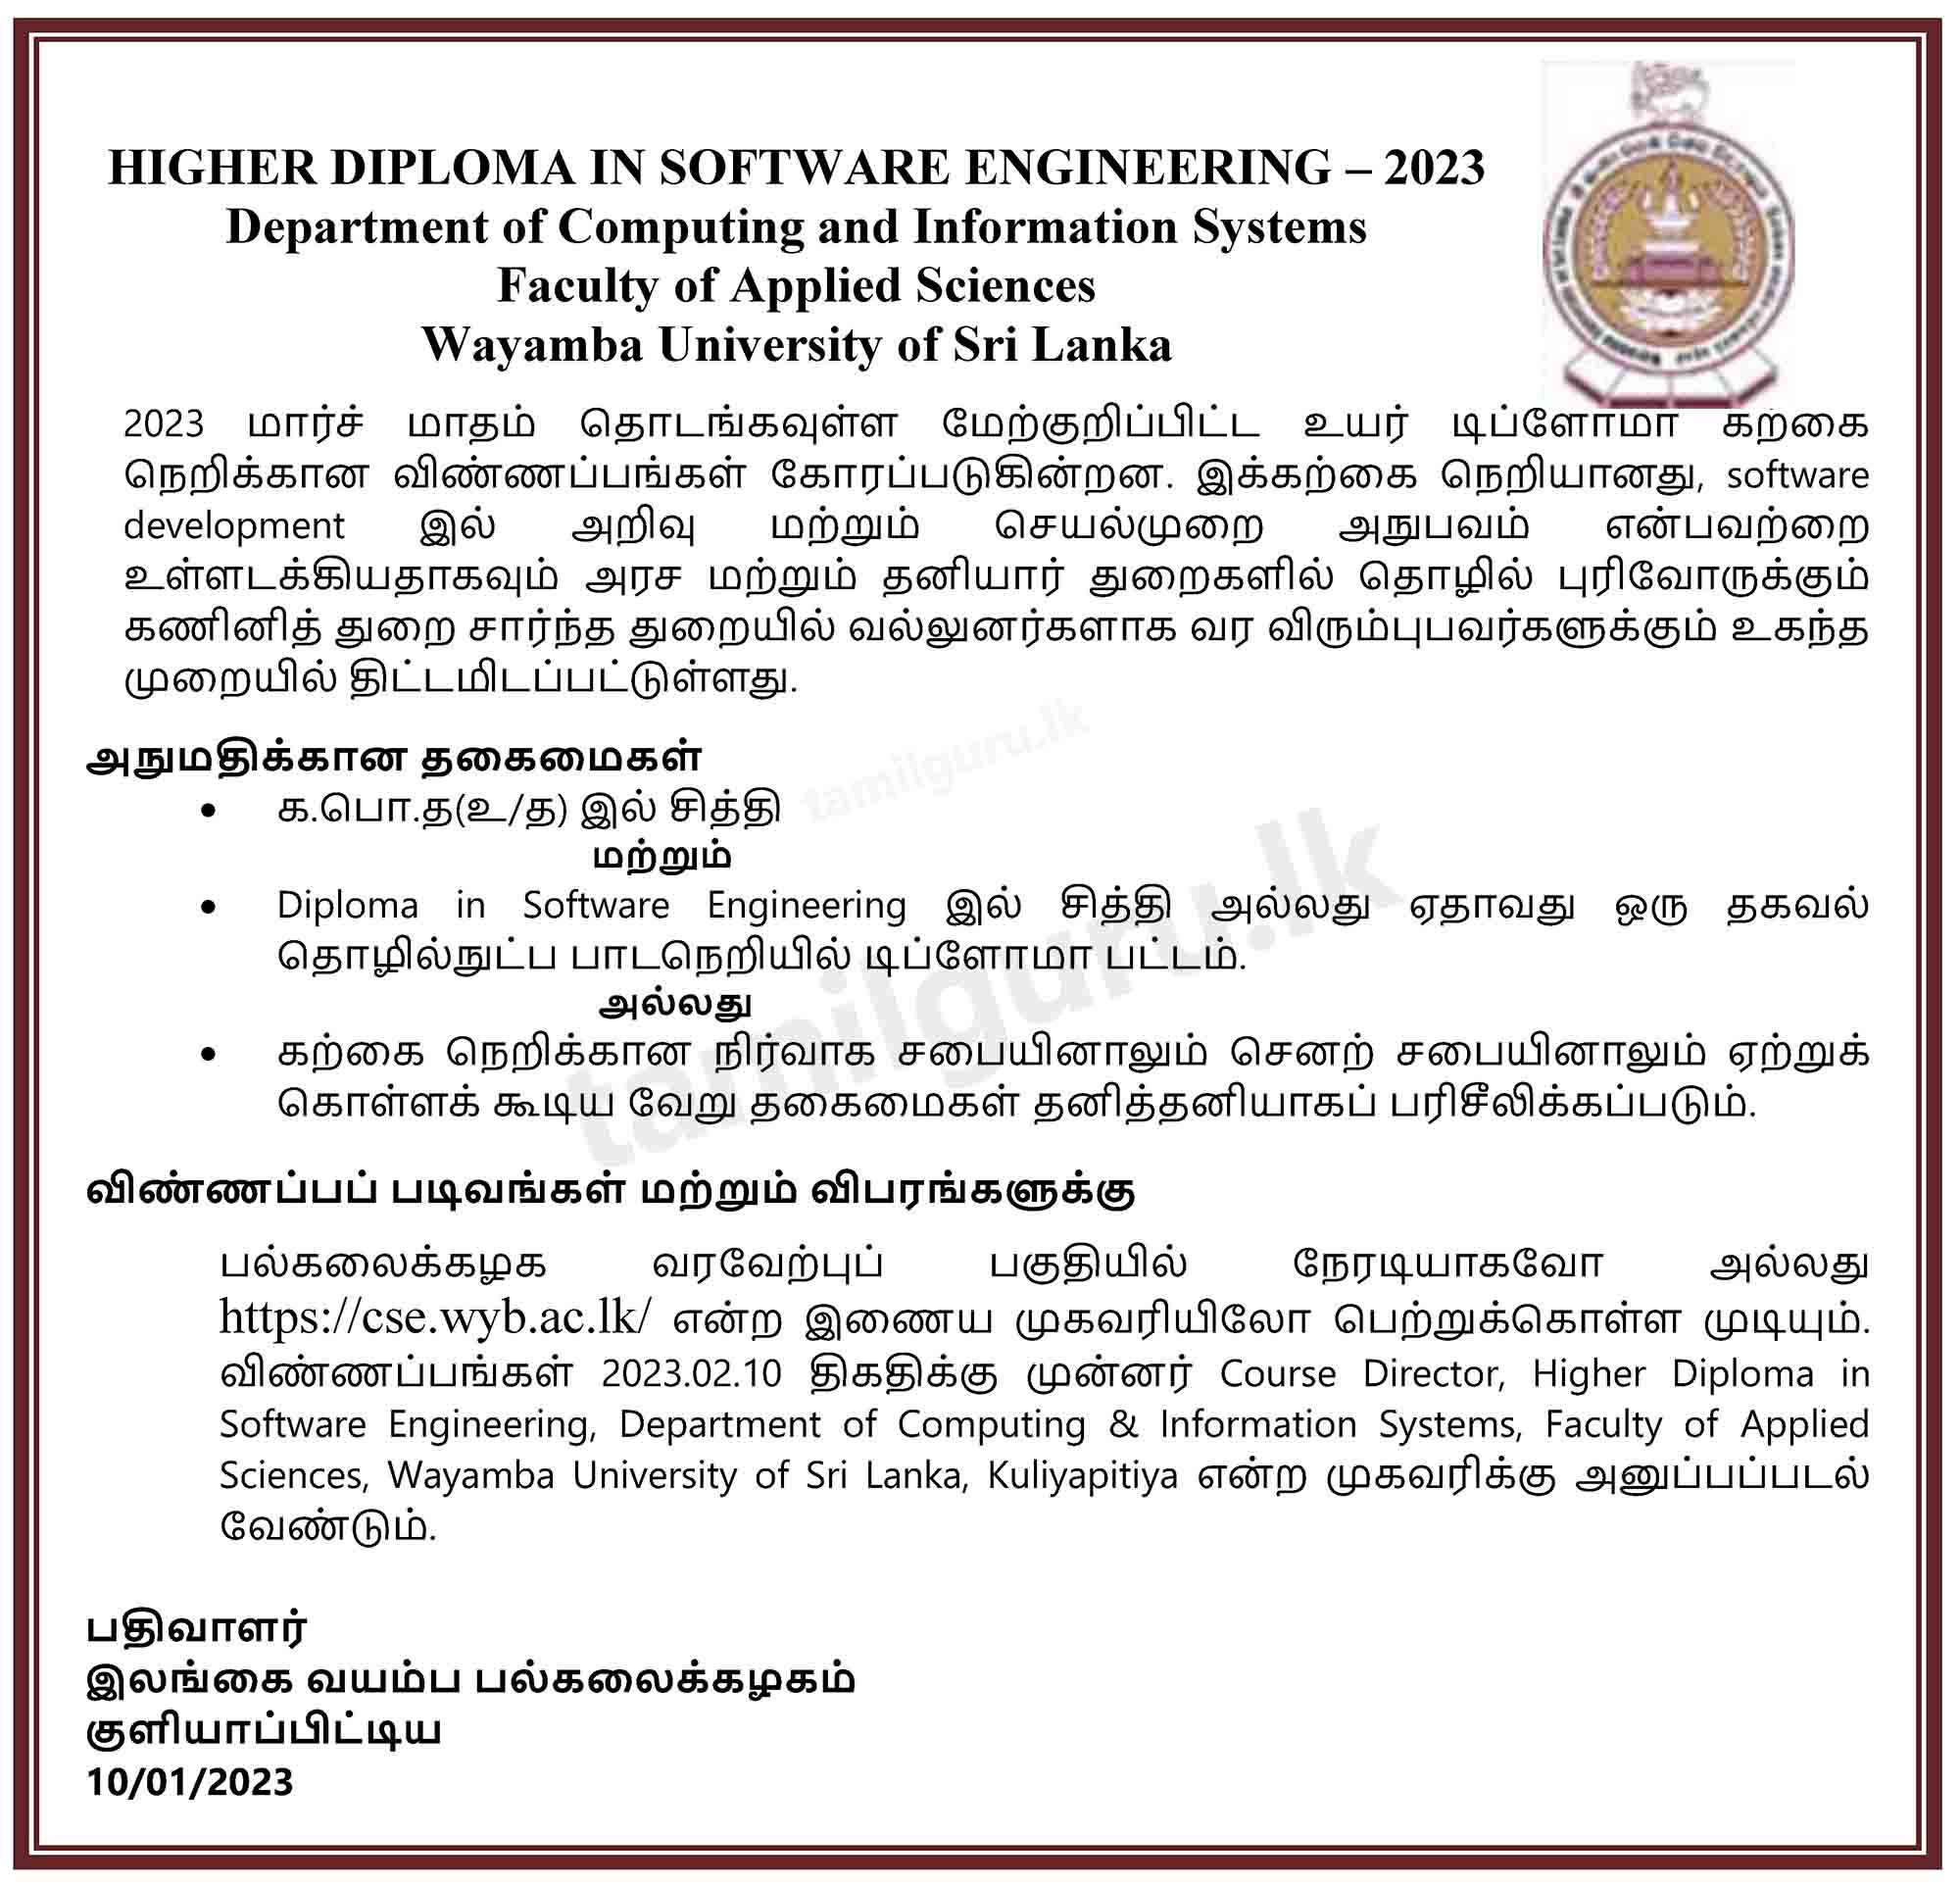 Higher Diploma in Software Engineering 2023 - Wayamba University of Sri Lanka